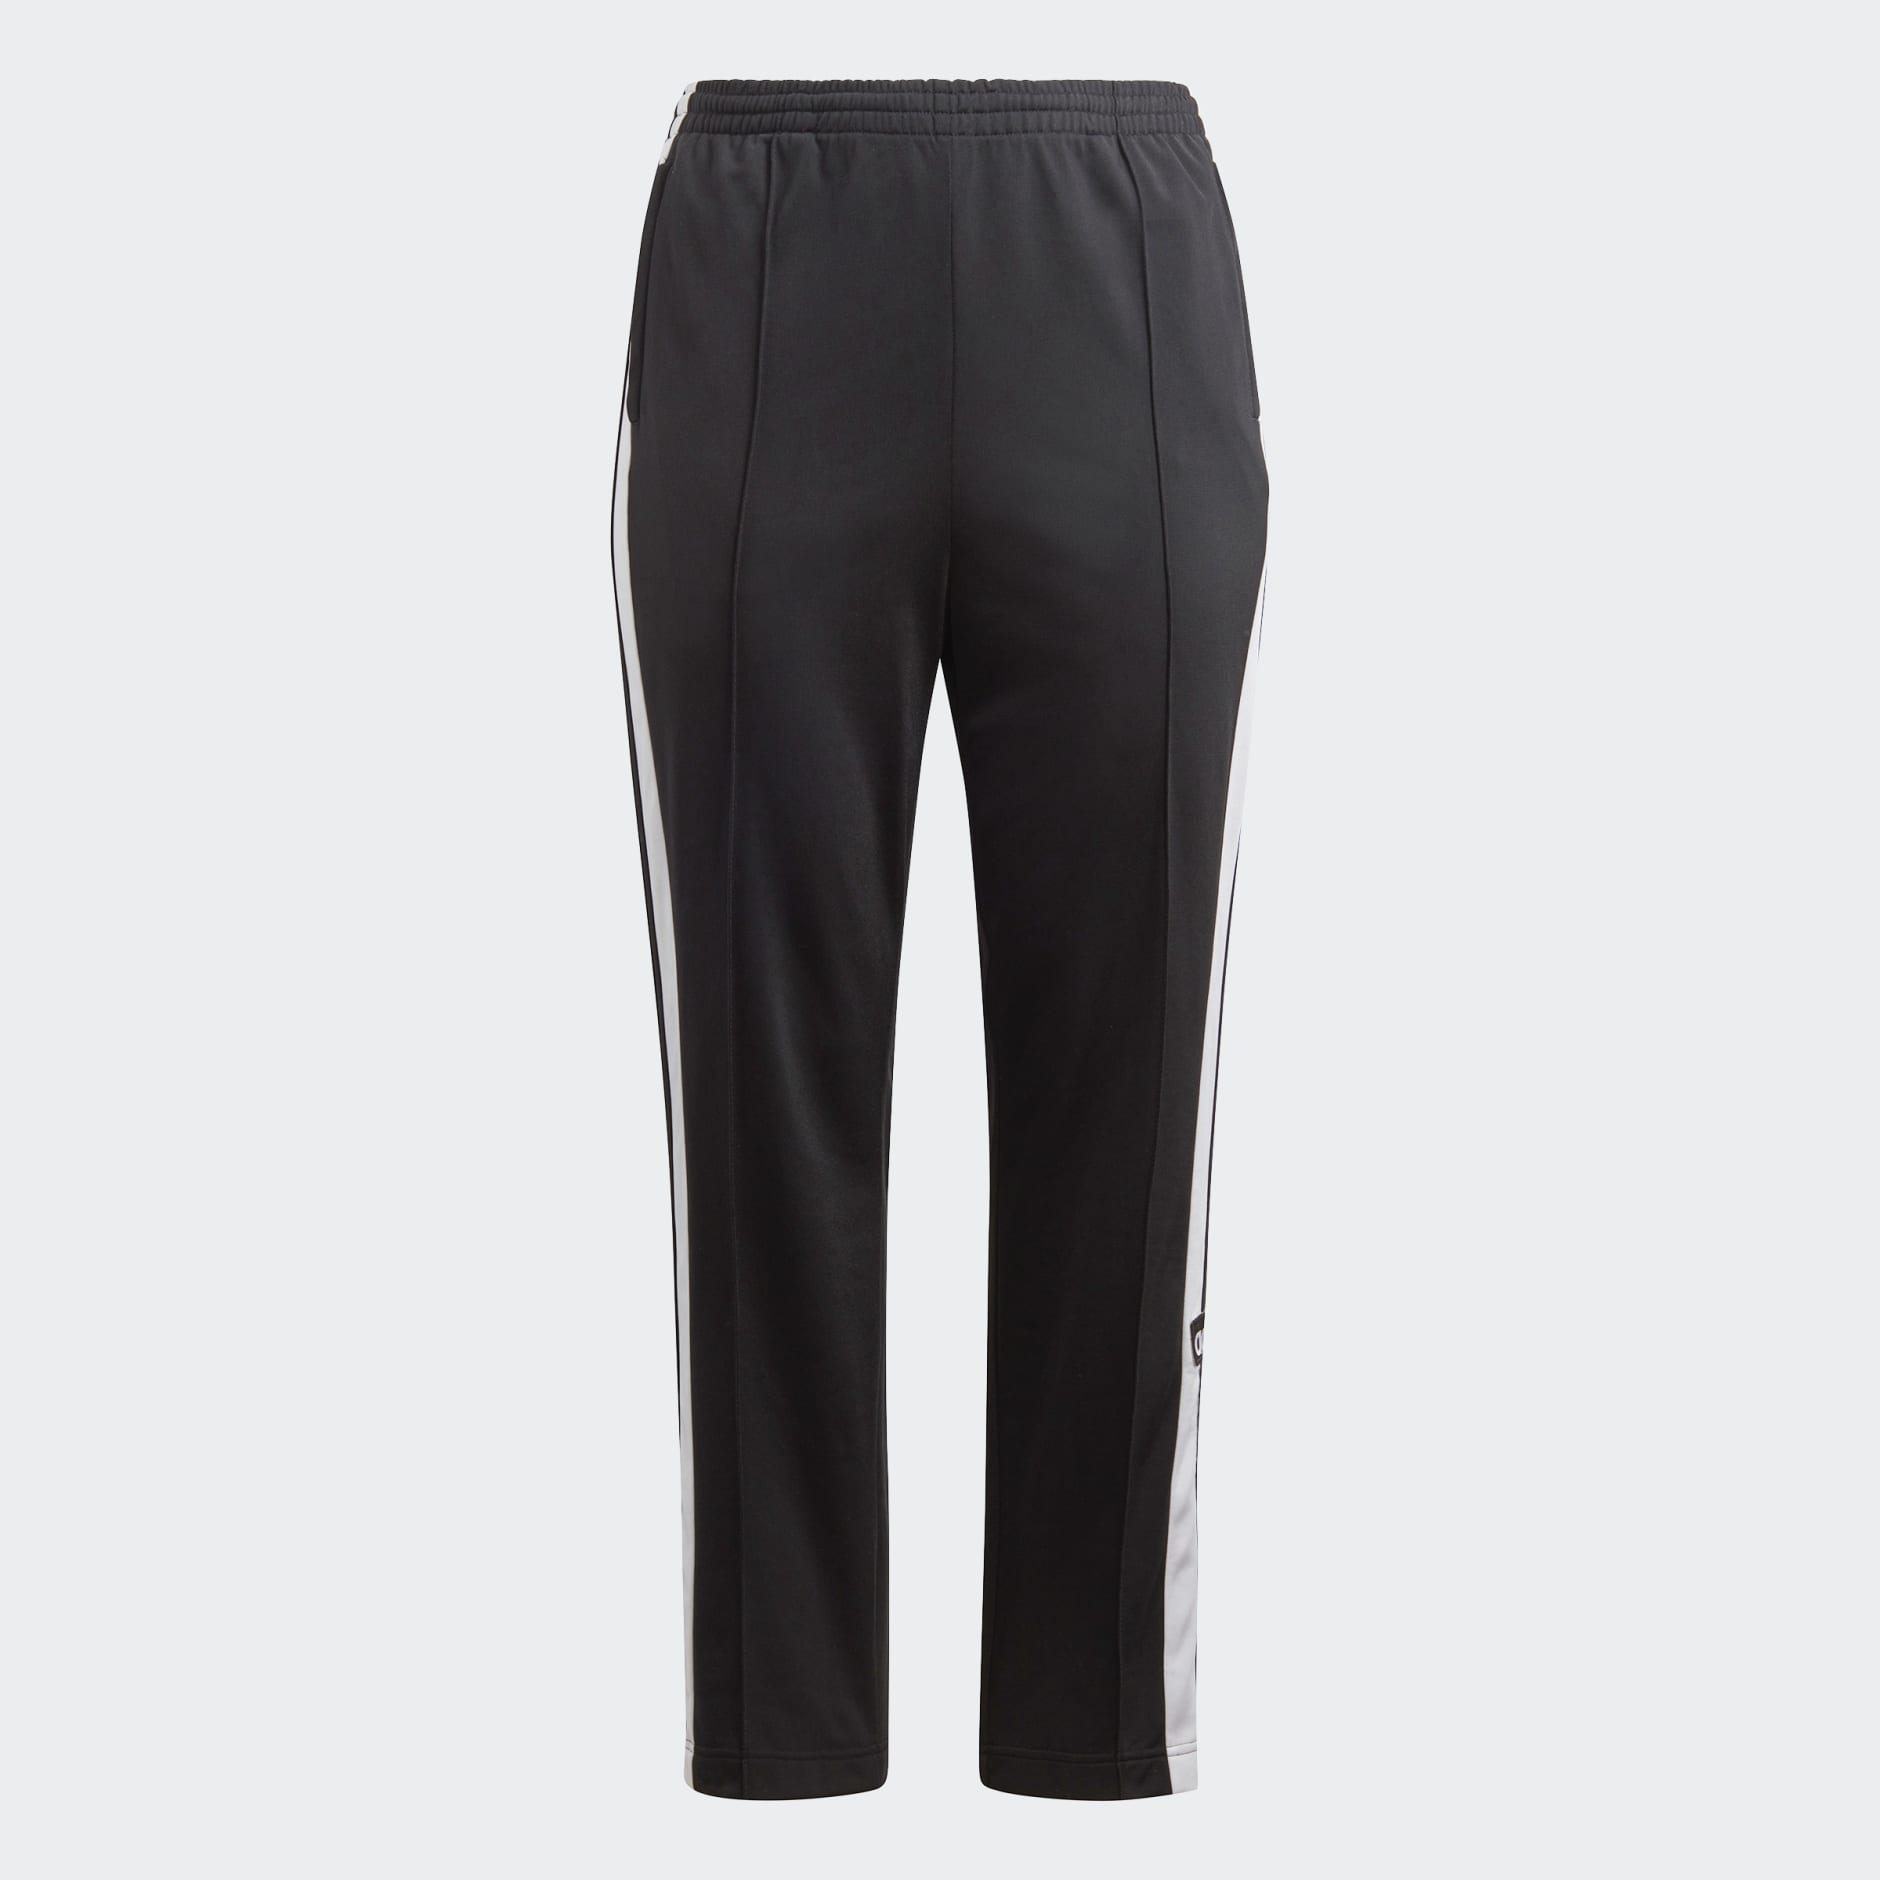 adidas Track Pants (Plus Size) Women's, Black, Size 1X